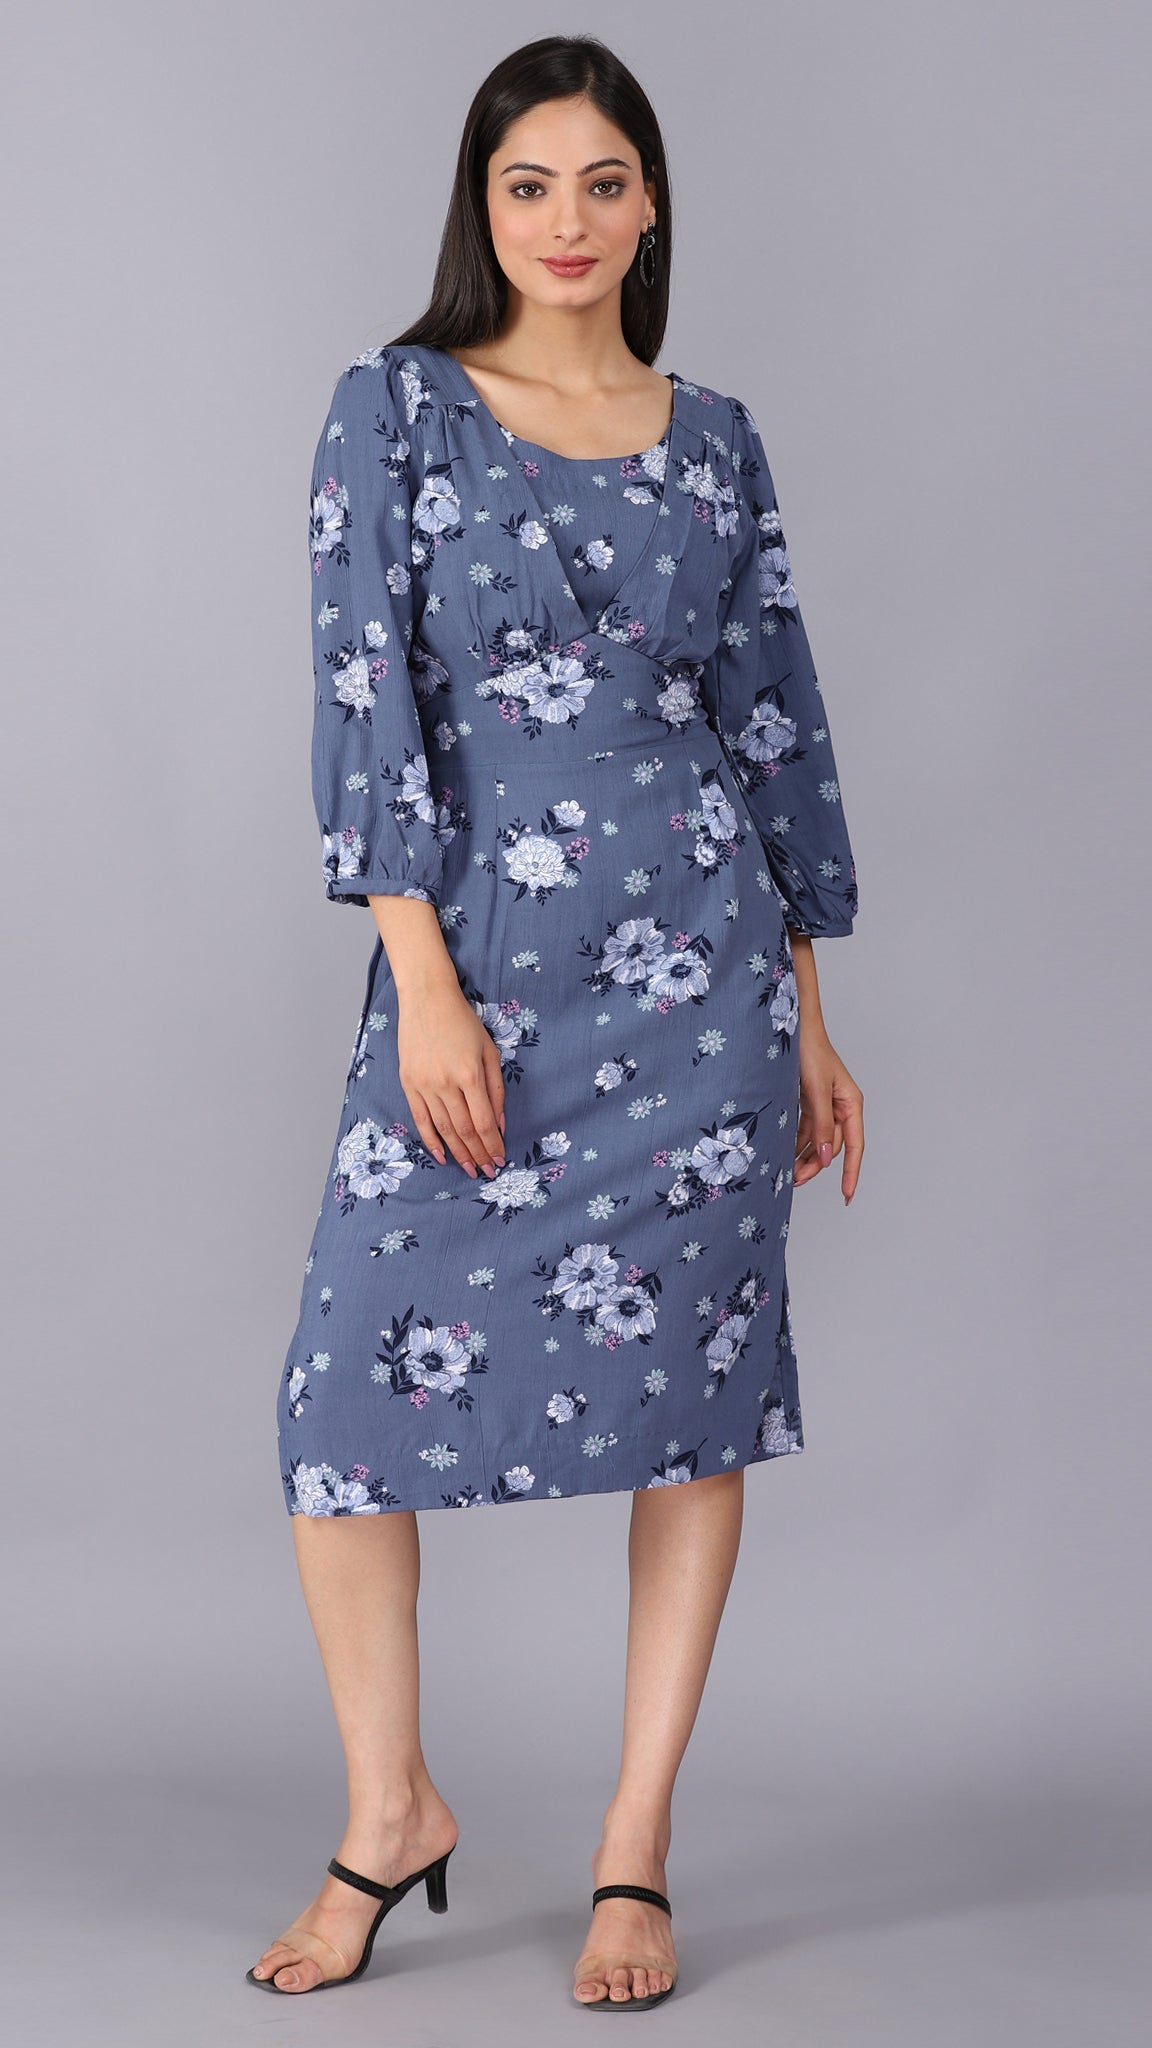 Floral print cornflower blue dress